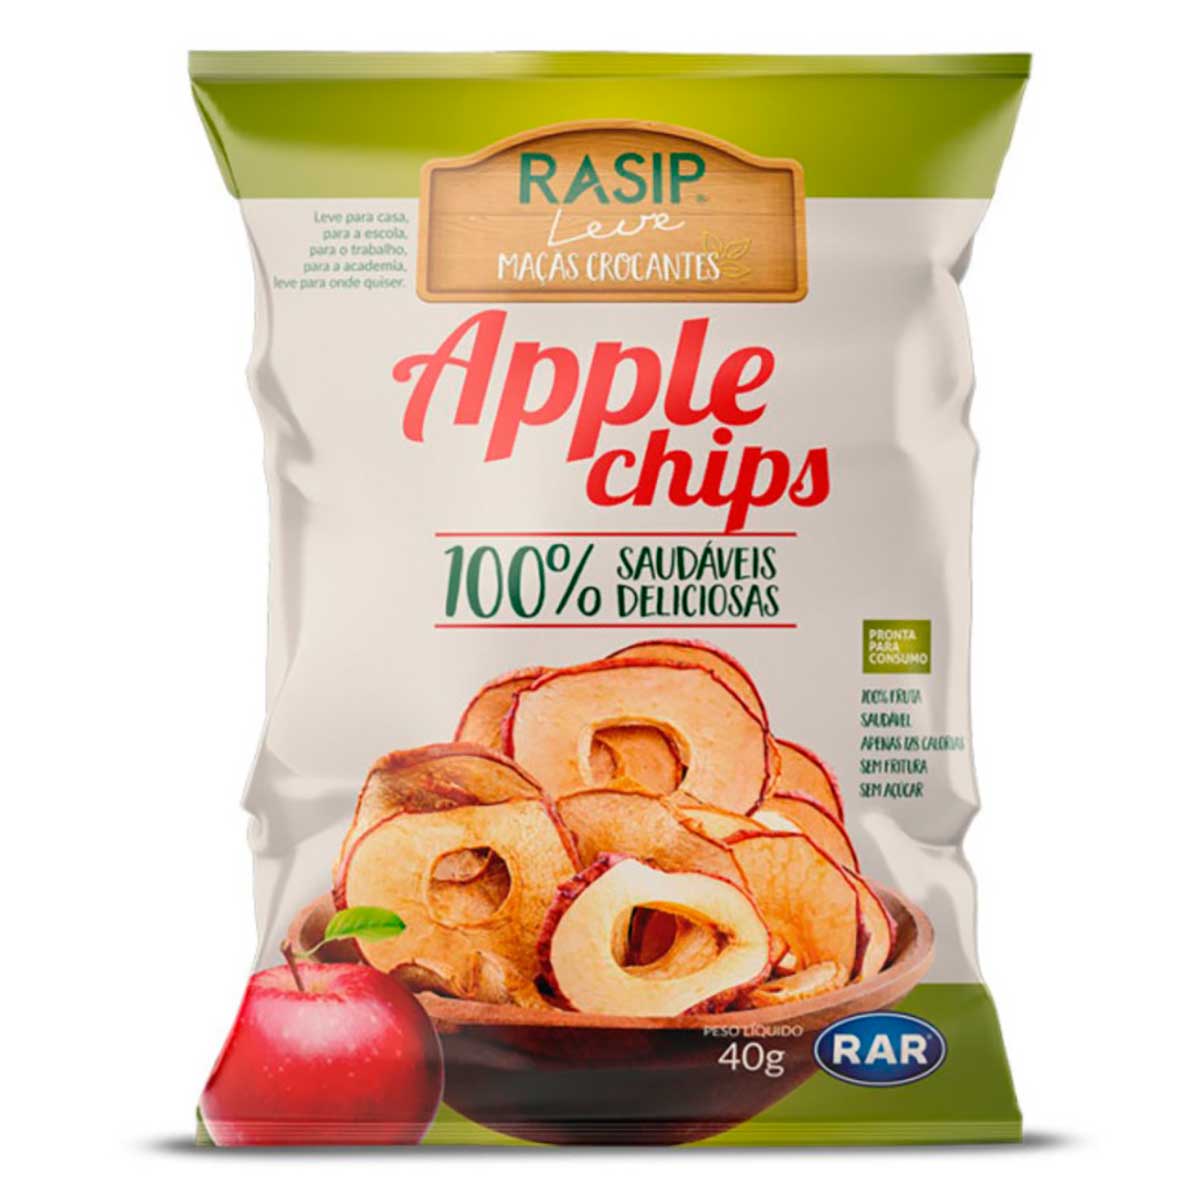 maca-crocante-apple-chips-rasip-leve-40-g-1.jpg